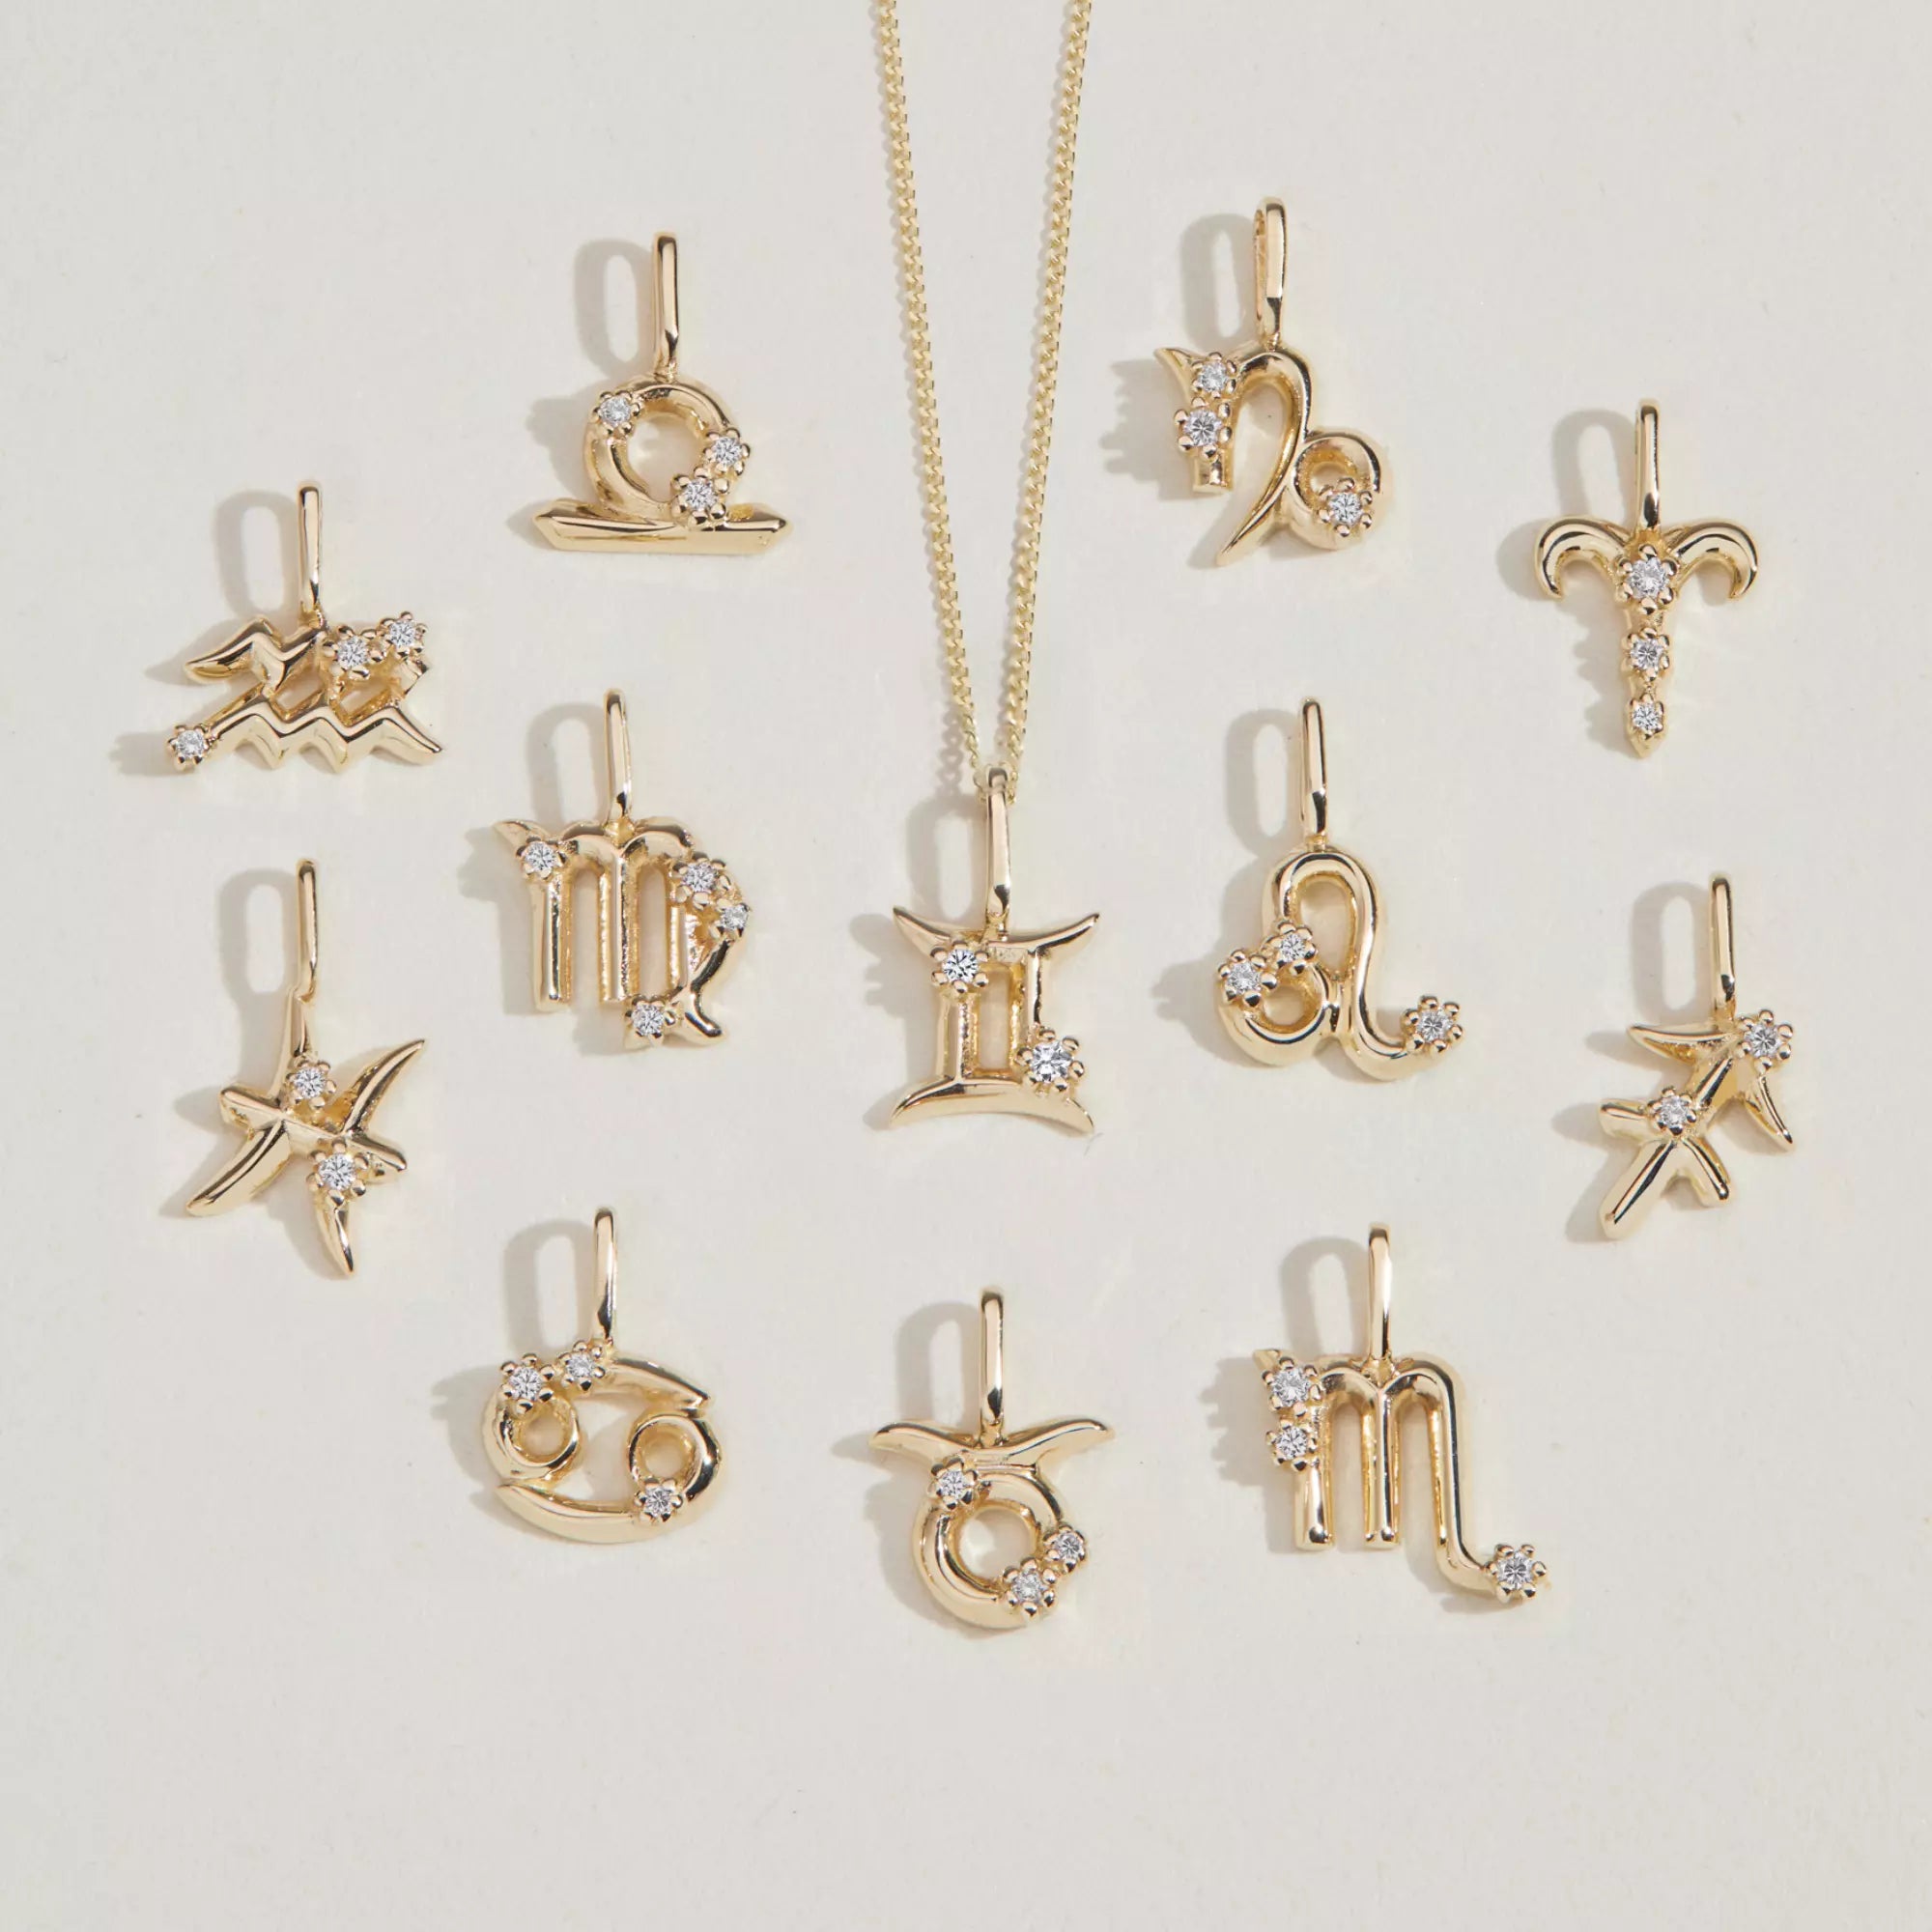 Solid Gold Genuine Diamond Zodiac Necklace